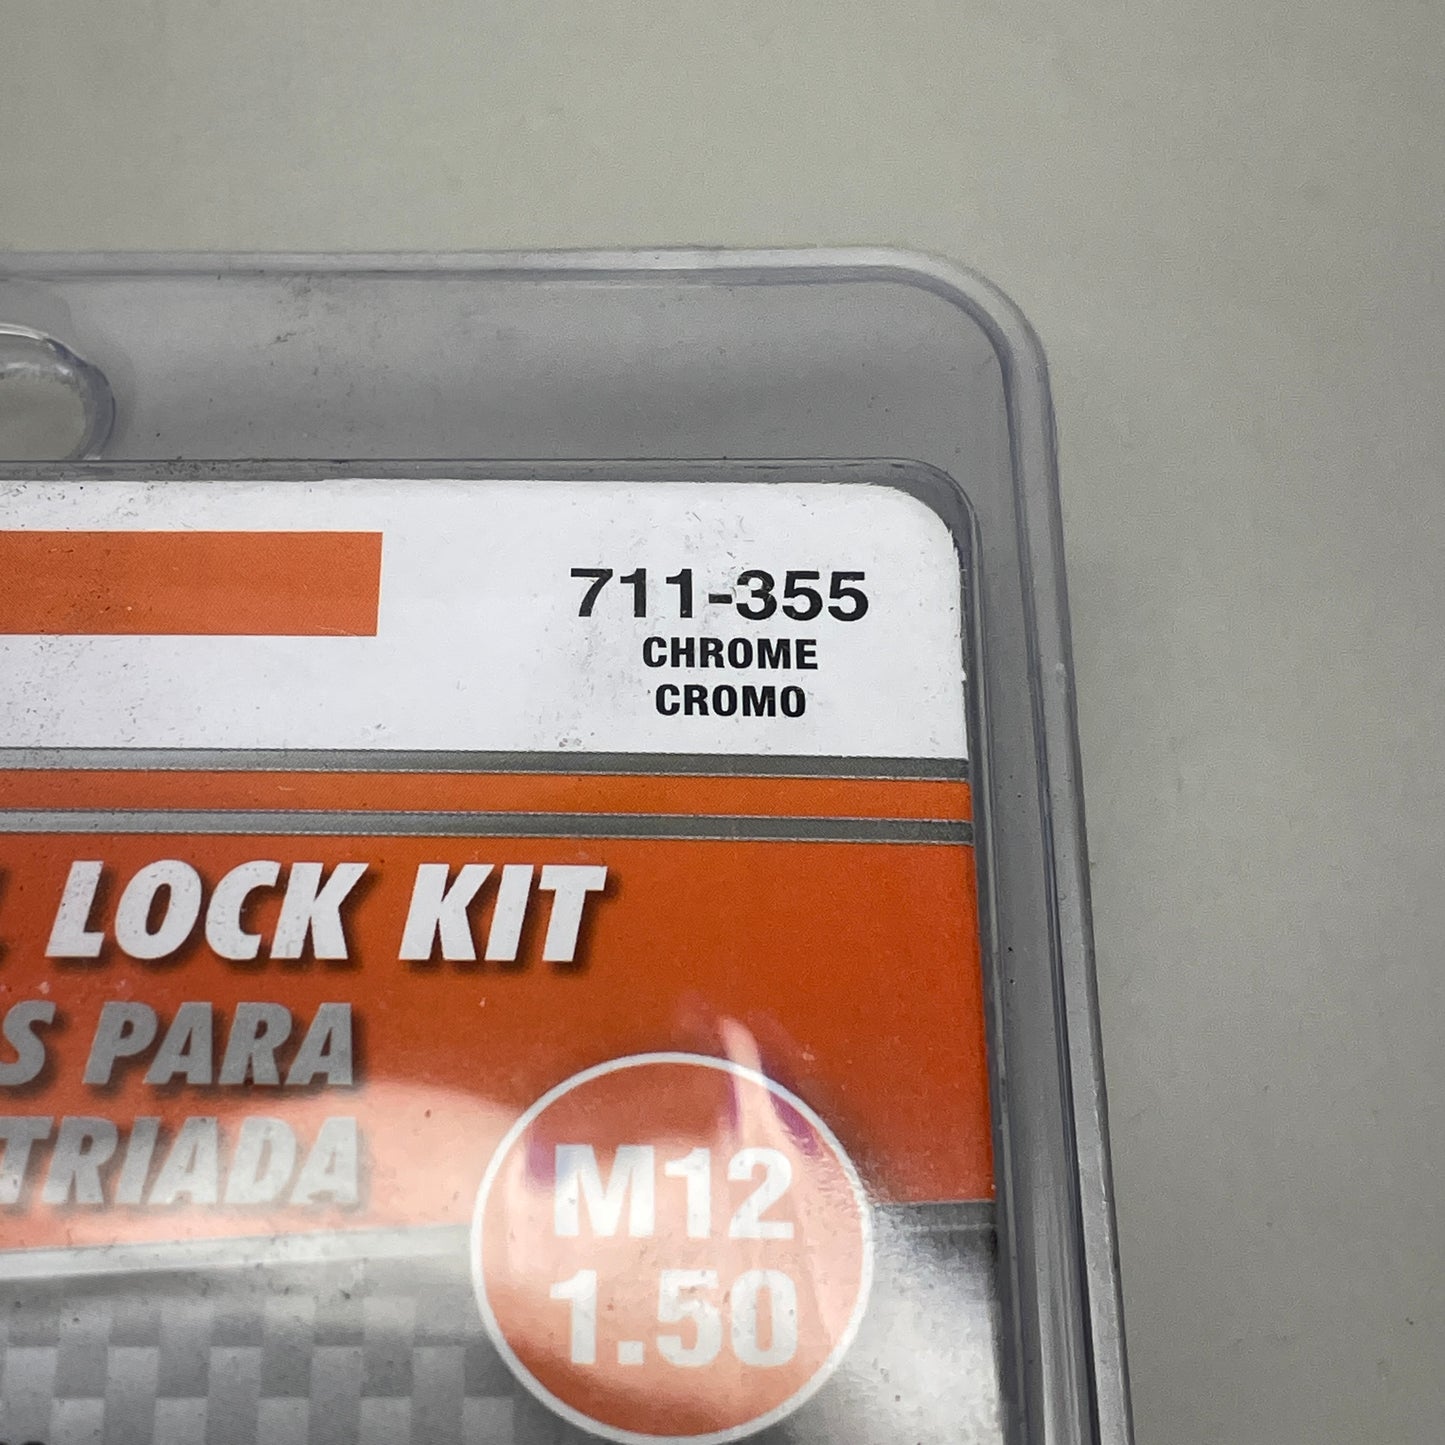 DORMAN Chrome Spline-Drive Wheel Lock Kit 711-355